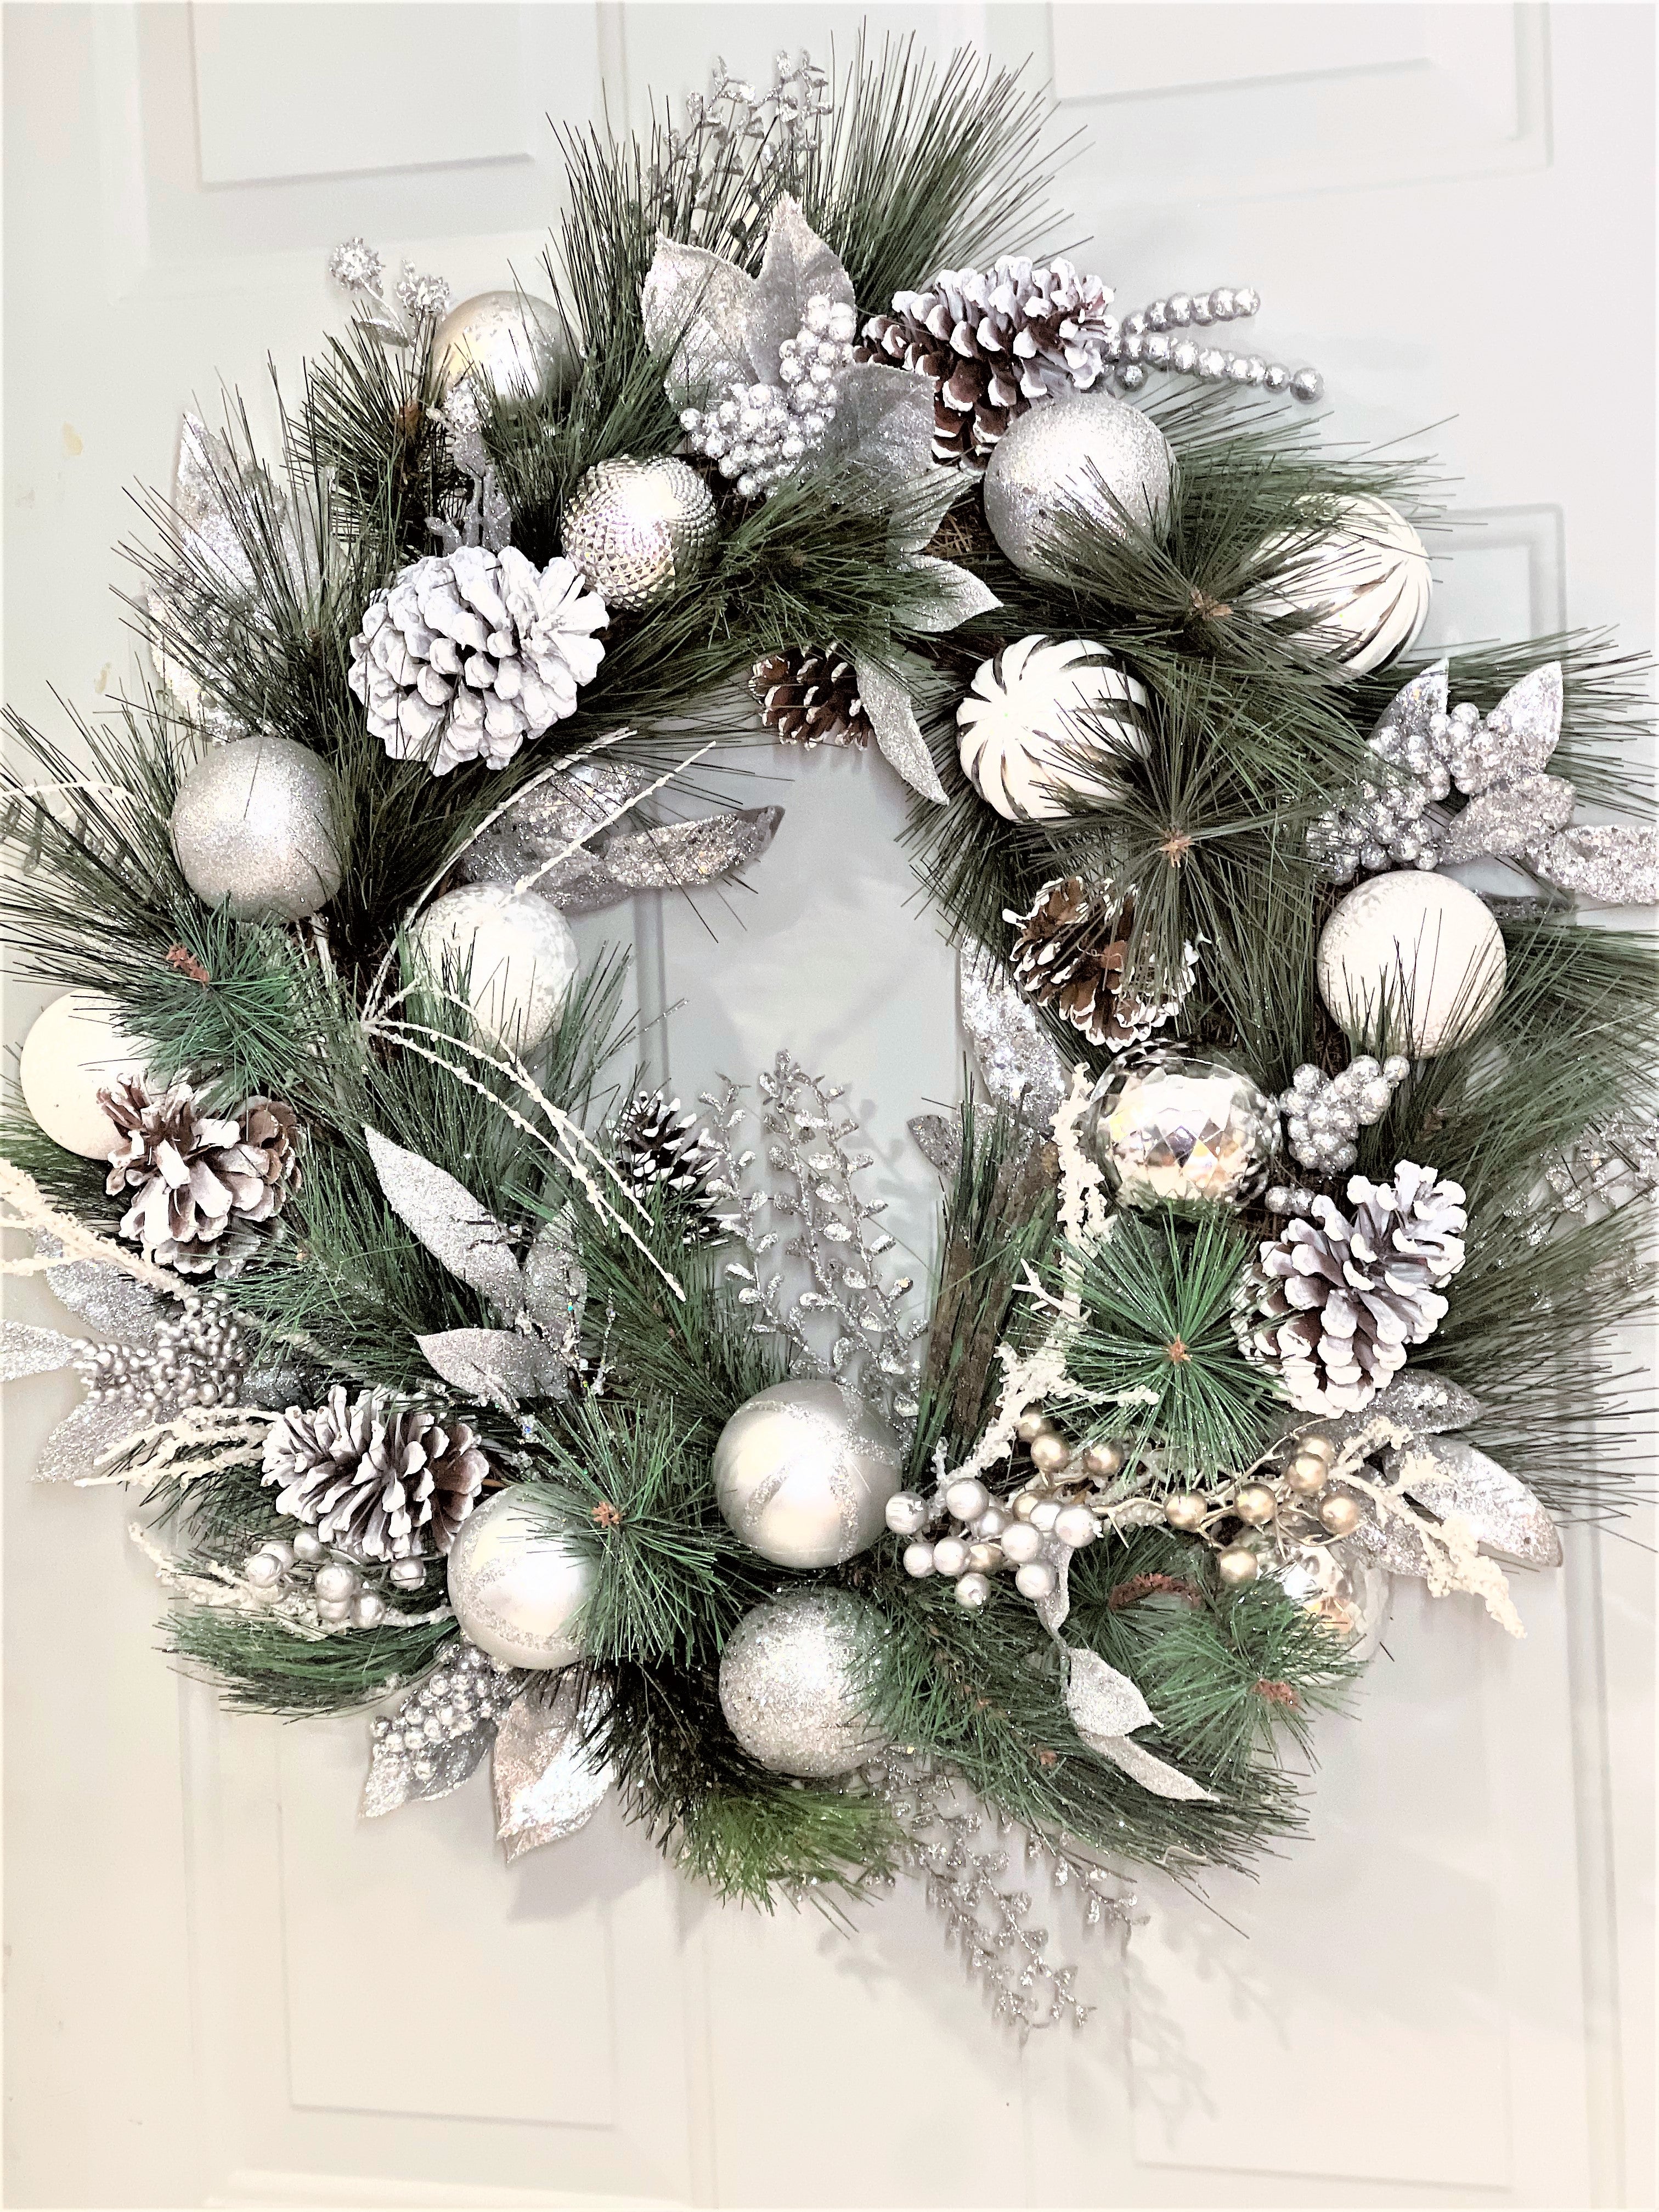 White/Silver Wreath 26"